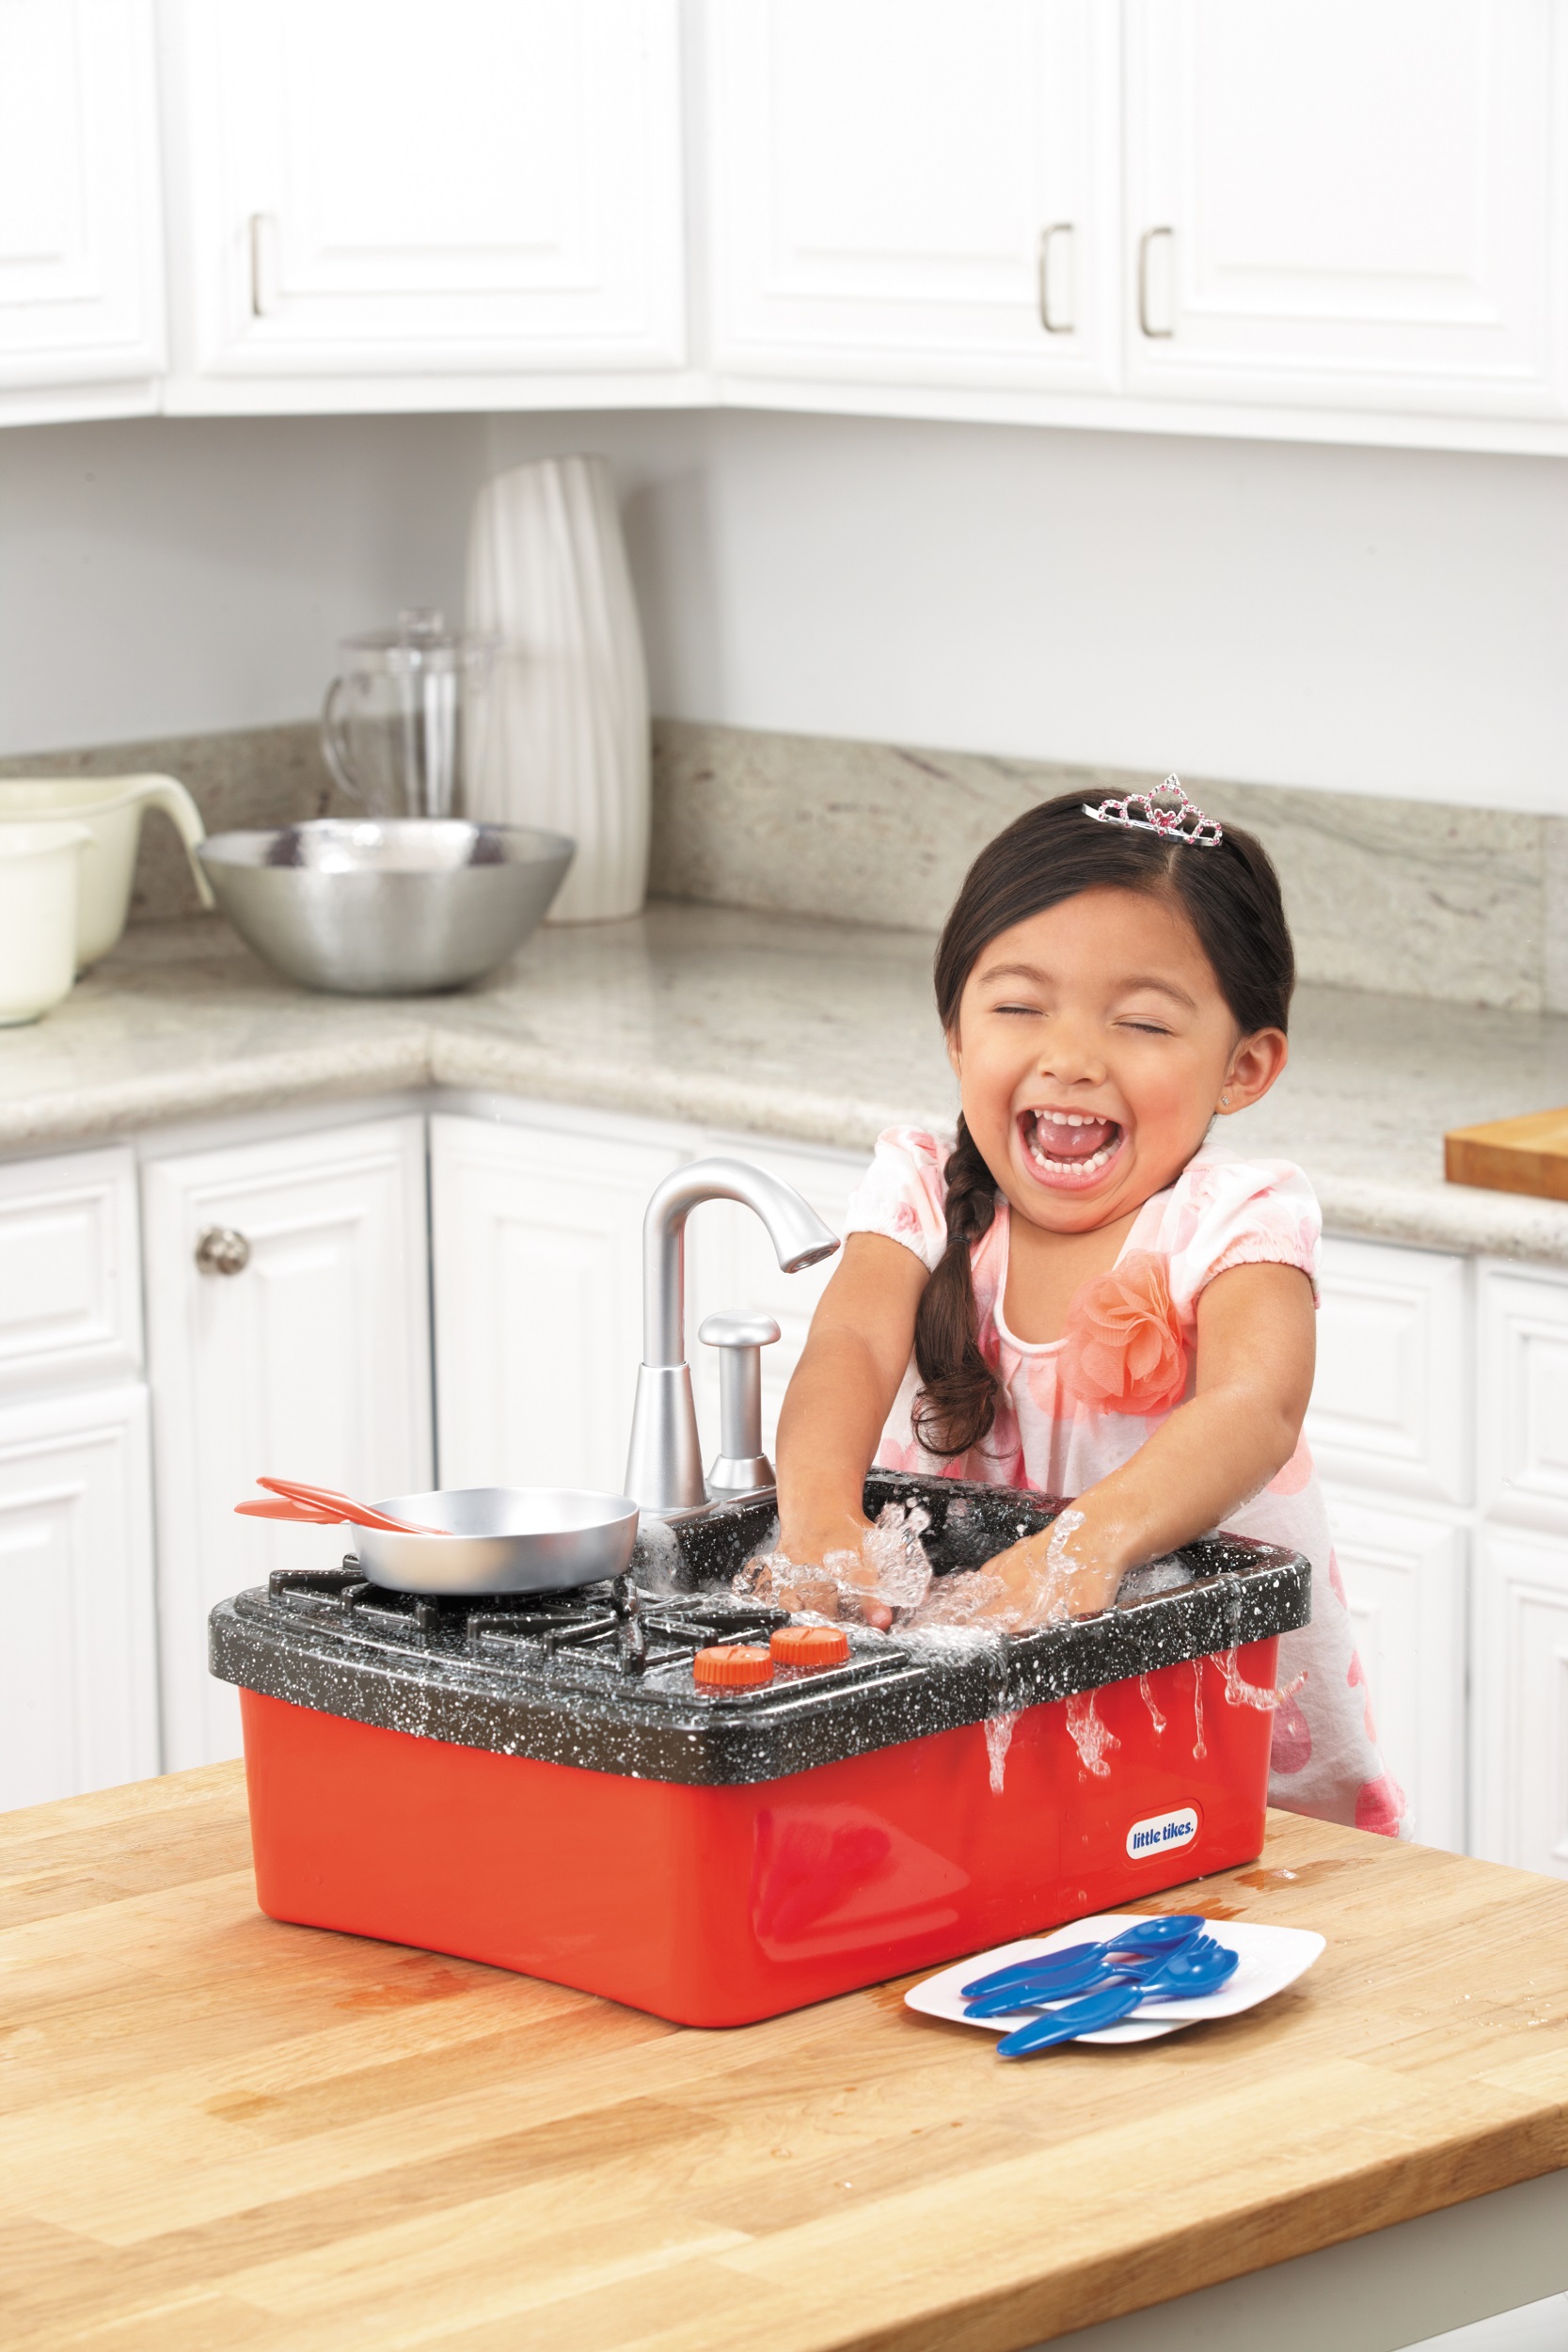 Little Tikes Splish Splash Sink & Stove Play Set - image 3 of 6